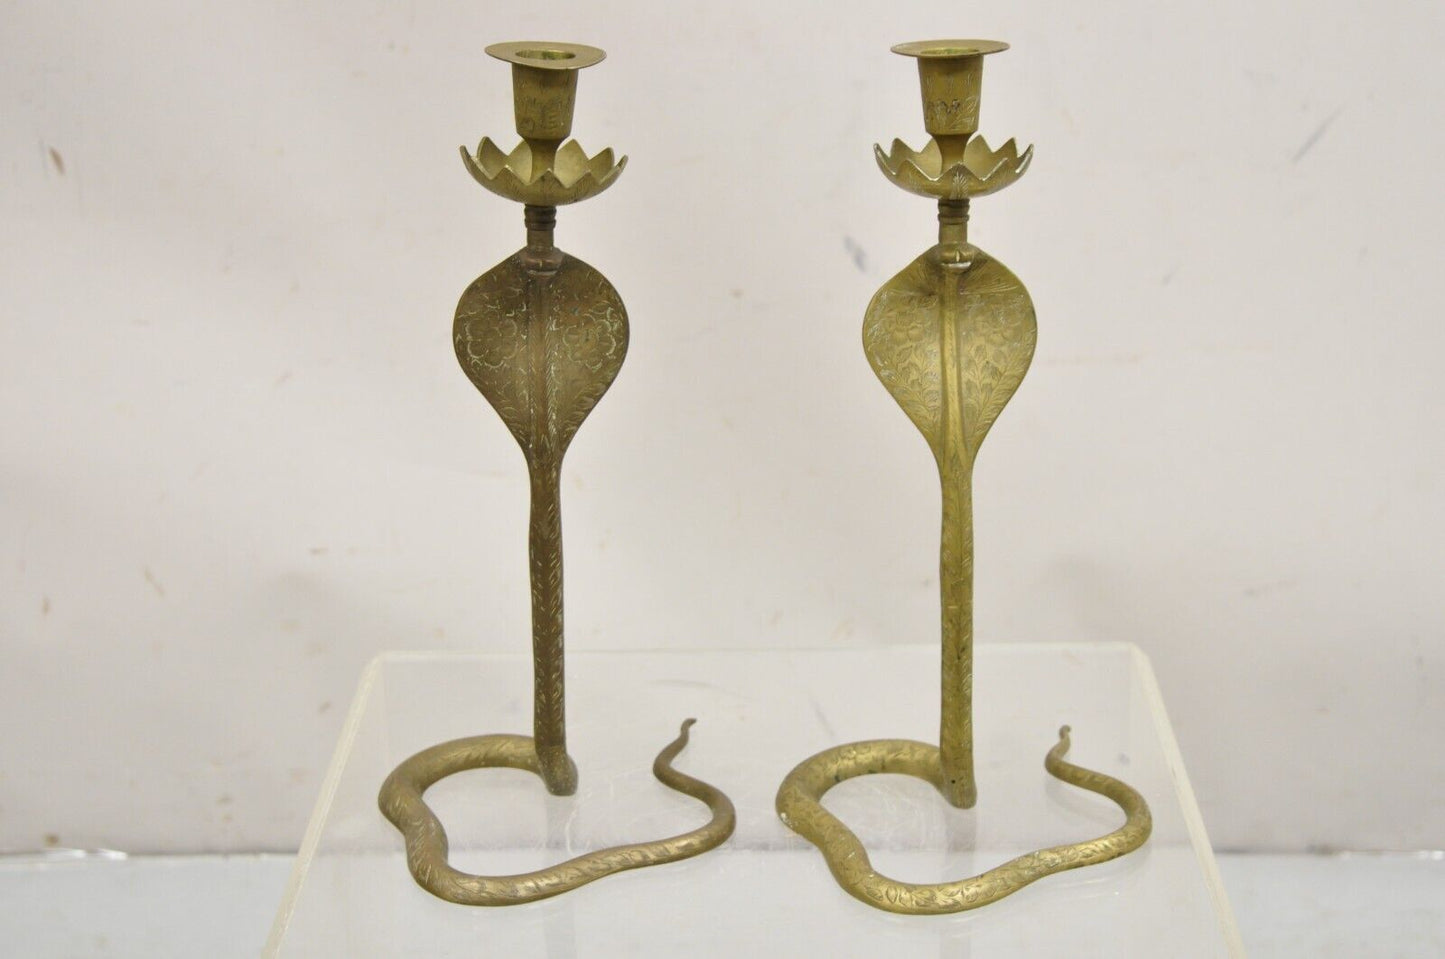 Vintage Brass Figural Hollywood Regency Coiled Cobra Snake Candlesticks - a Pair